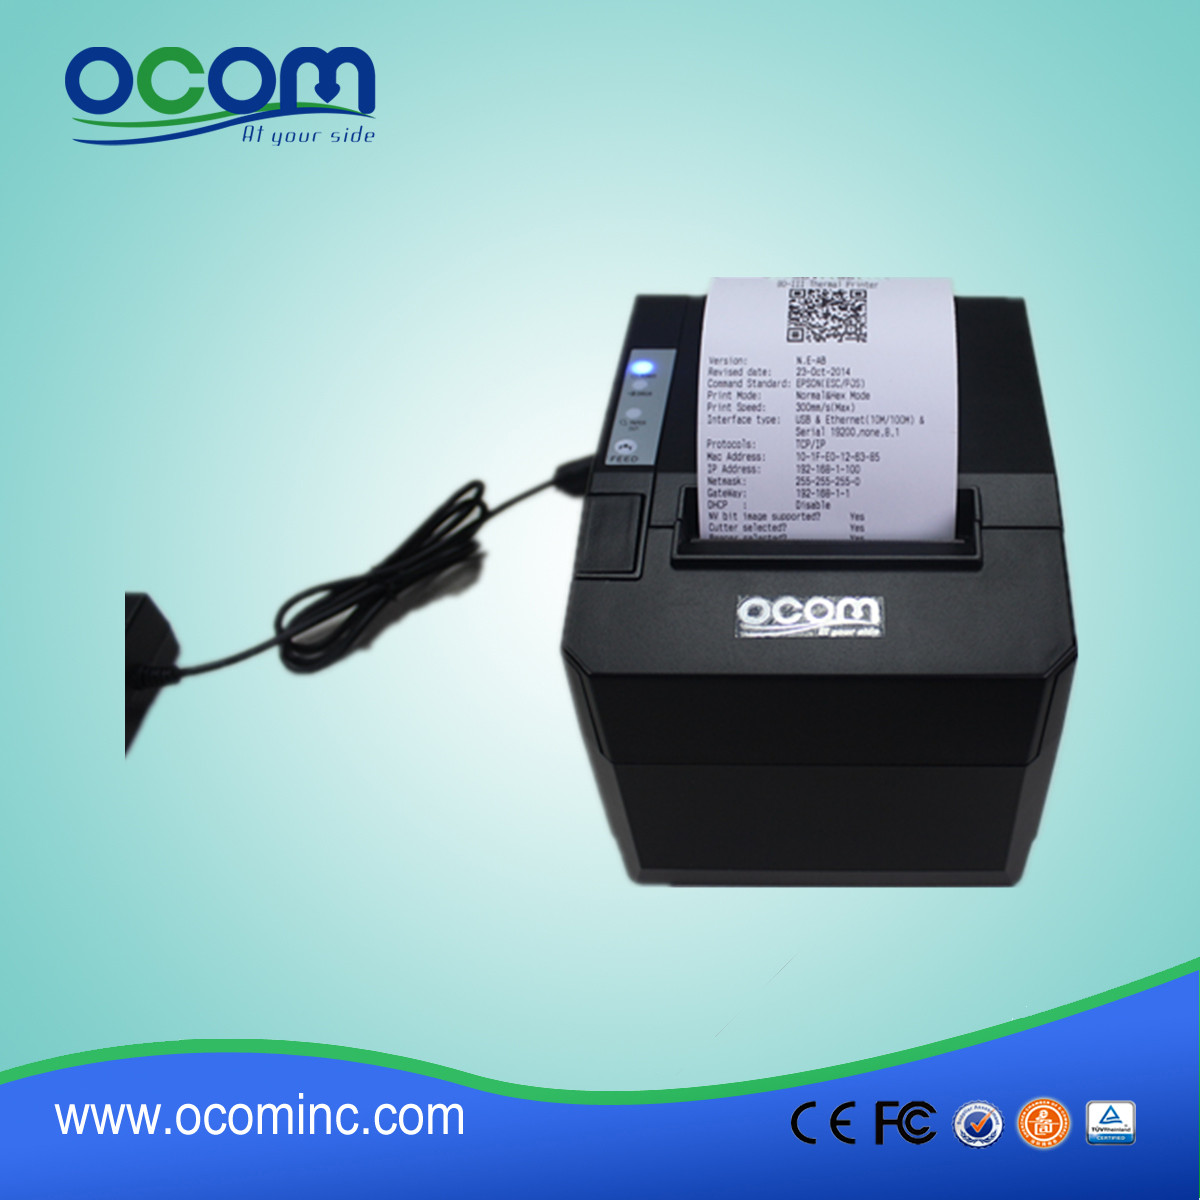 OCPP-88a 80mm Thermal Restaurant Bill POS stampante con taglierina automatica